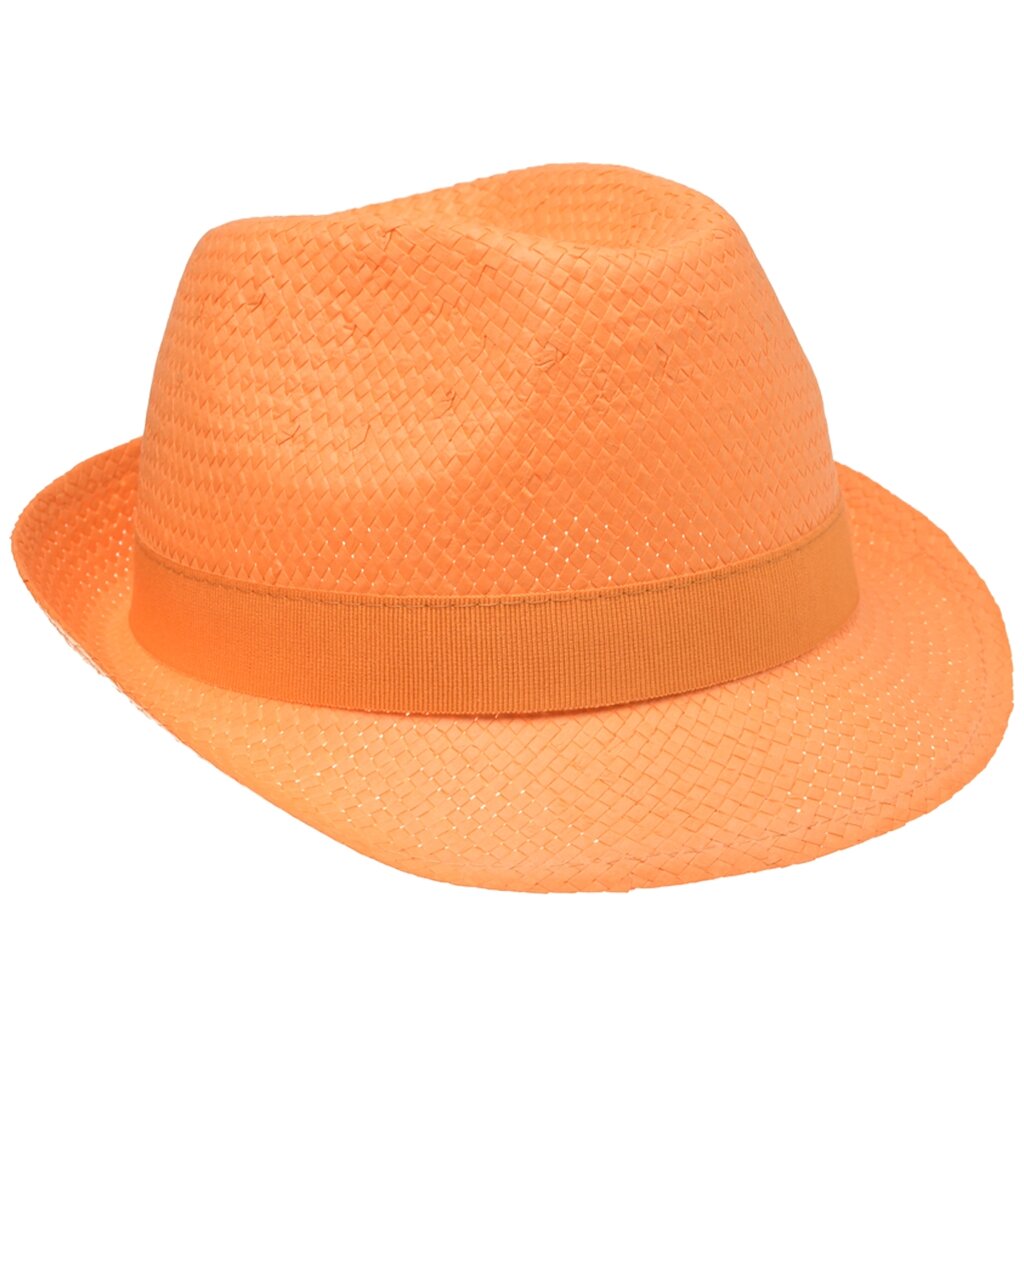 Оранжевая шляпа с лентой Catya от компании Admi - фото 1